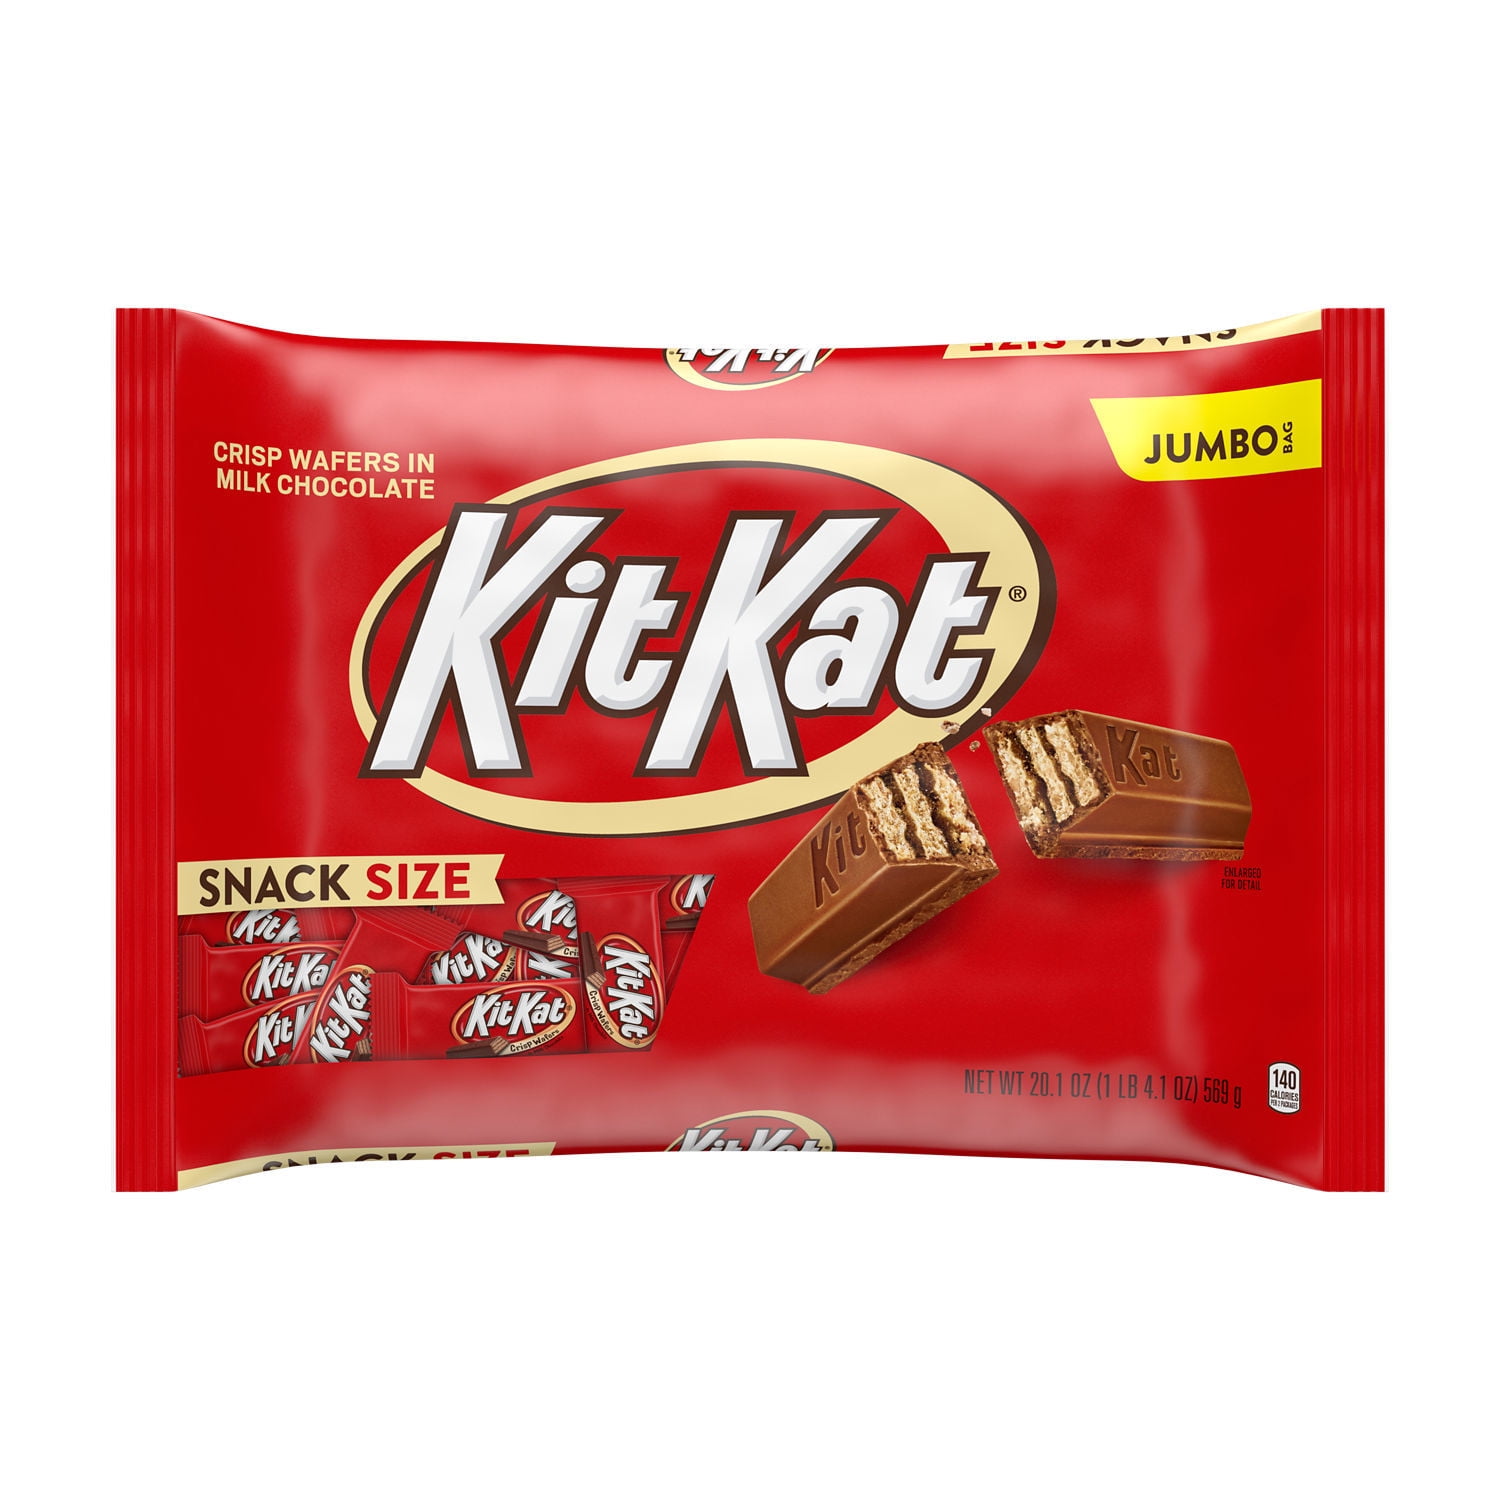 KIT KAT Milk Chocolate Snack Size, Easter Wafer Candy Bars Jumbo Bag, 20.1 oz